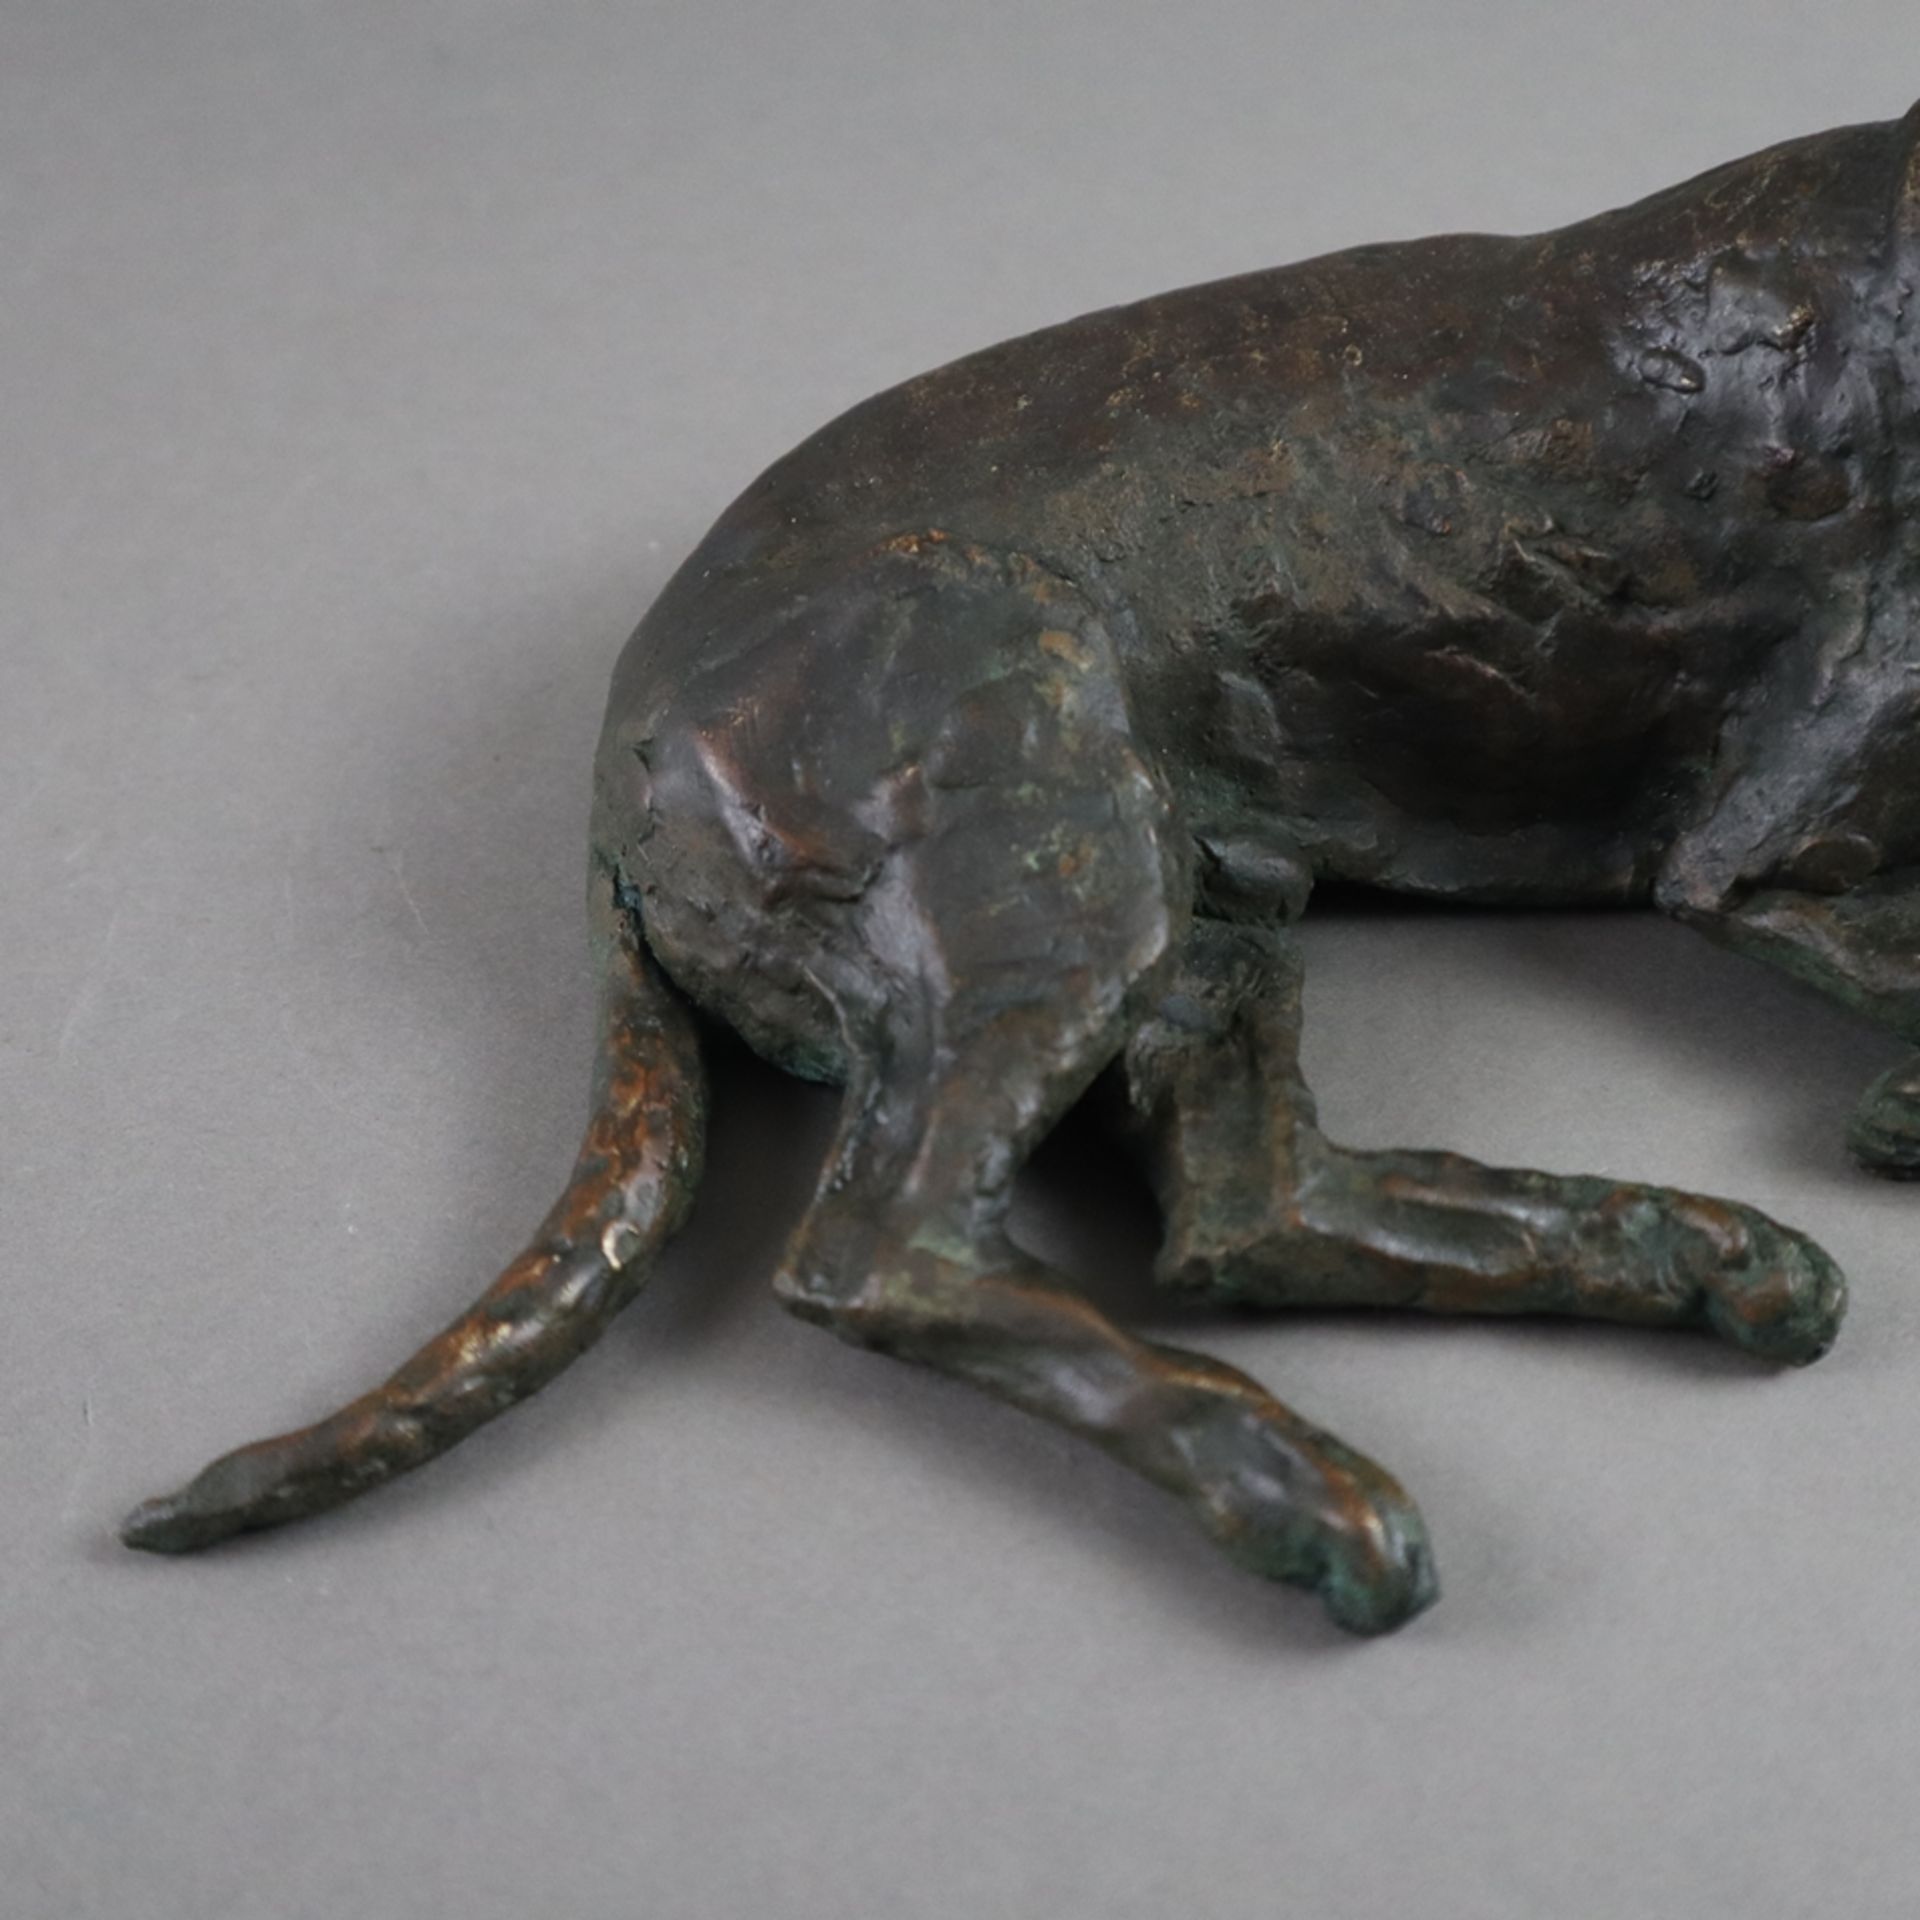 Tierfigur "Liegender Jagdhund" - 1. Hälfte 20. Jh., Bronze, dunkelbraun patiniert, Hohlguss, offene - Bild 4 aus 5